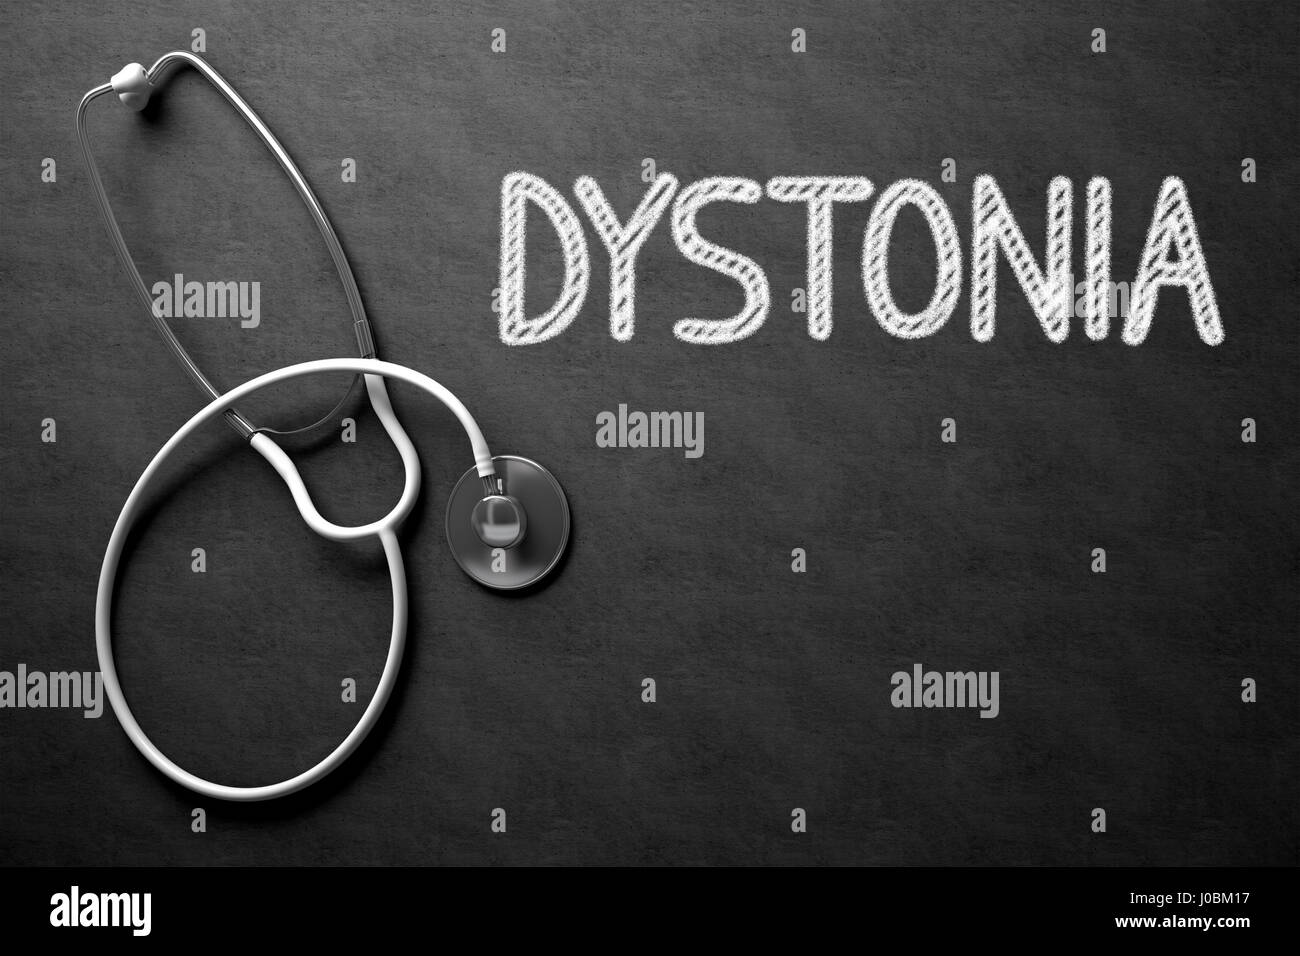 Dystonia - Text on Chalkboard. 3D Illustration. Stock Photo